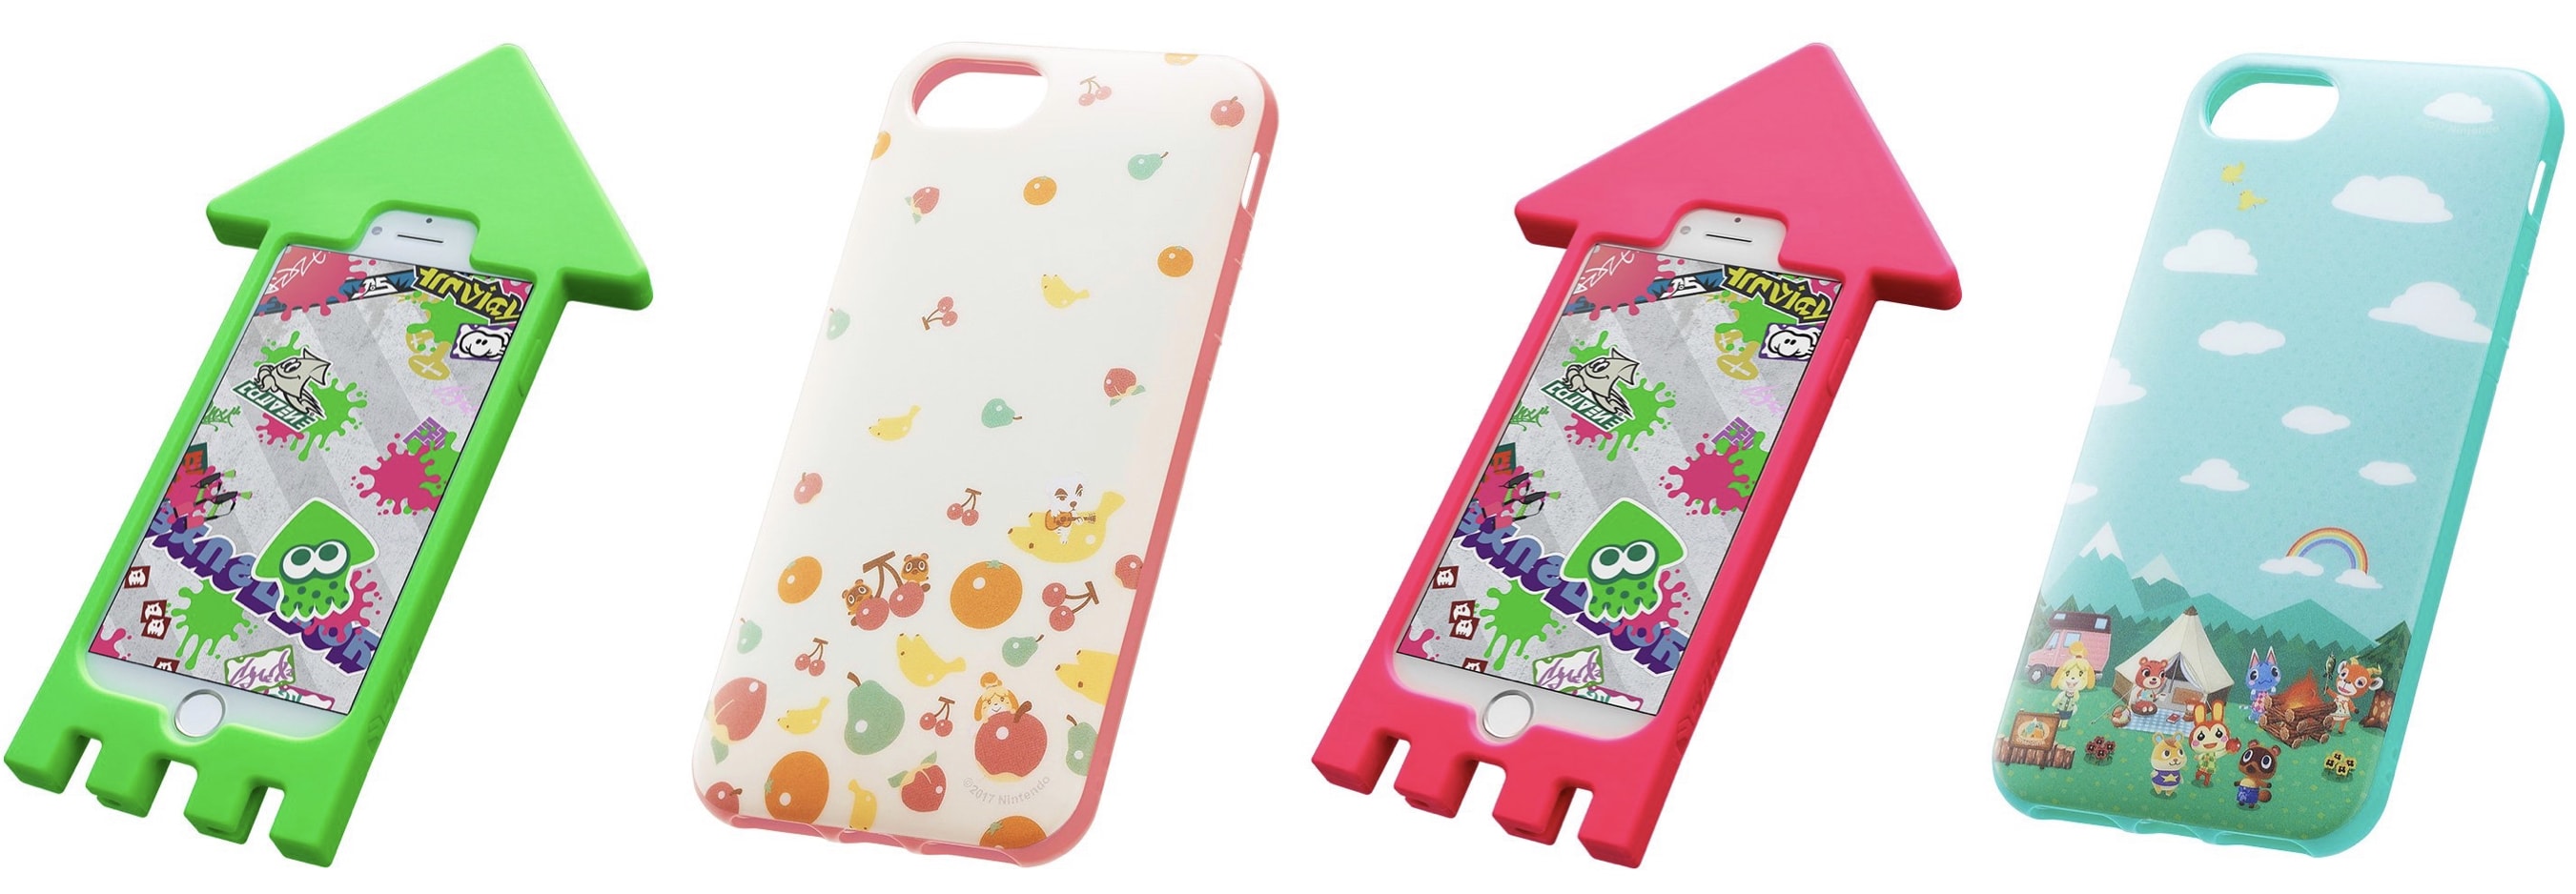 Nintendo iPhone cases